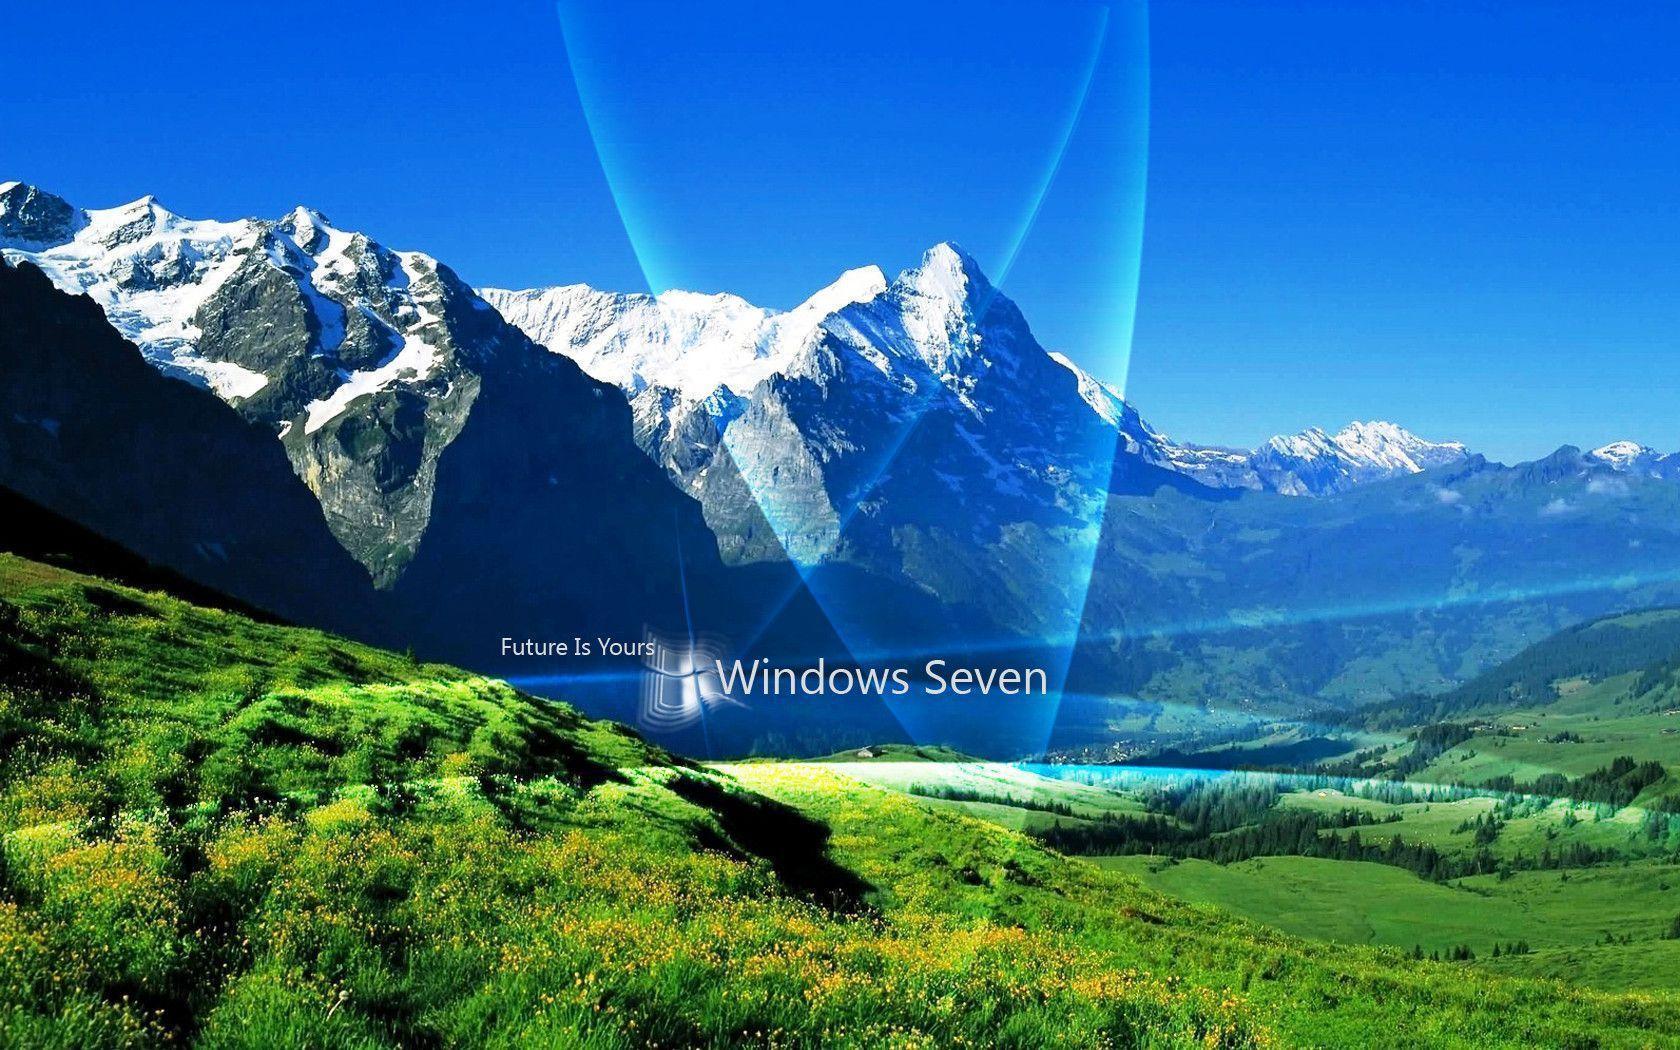 More Striking HD Windows 7 Wallpaper